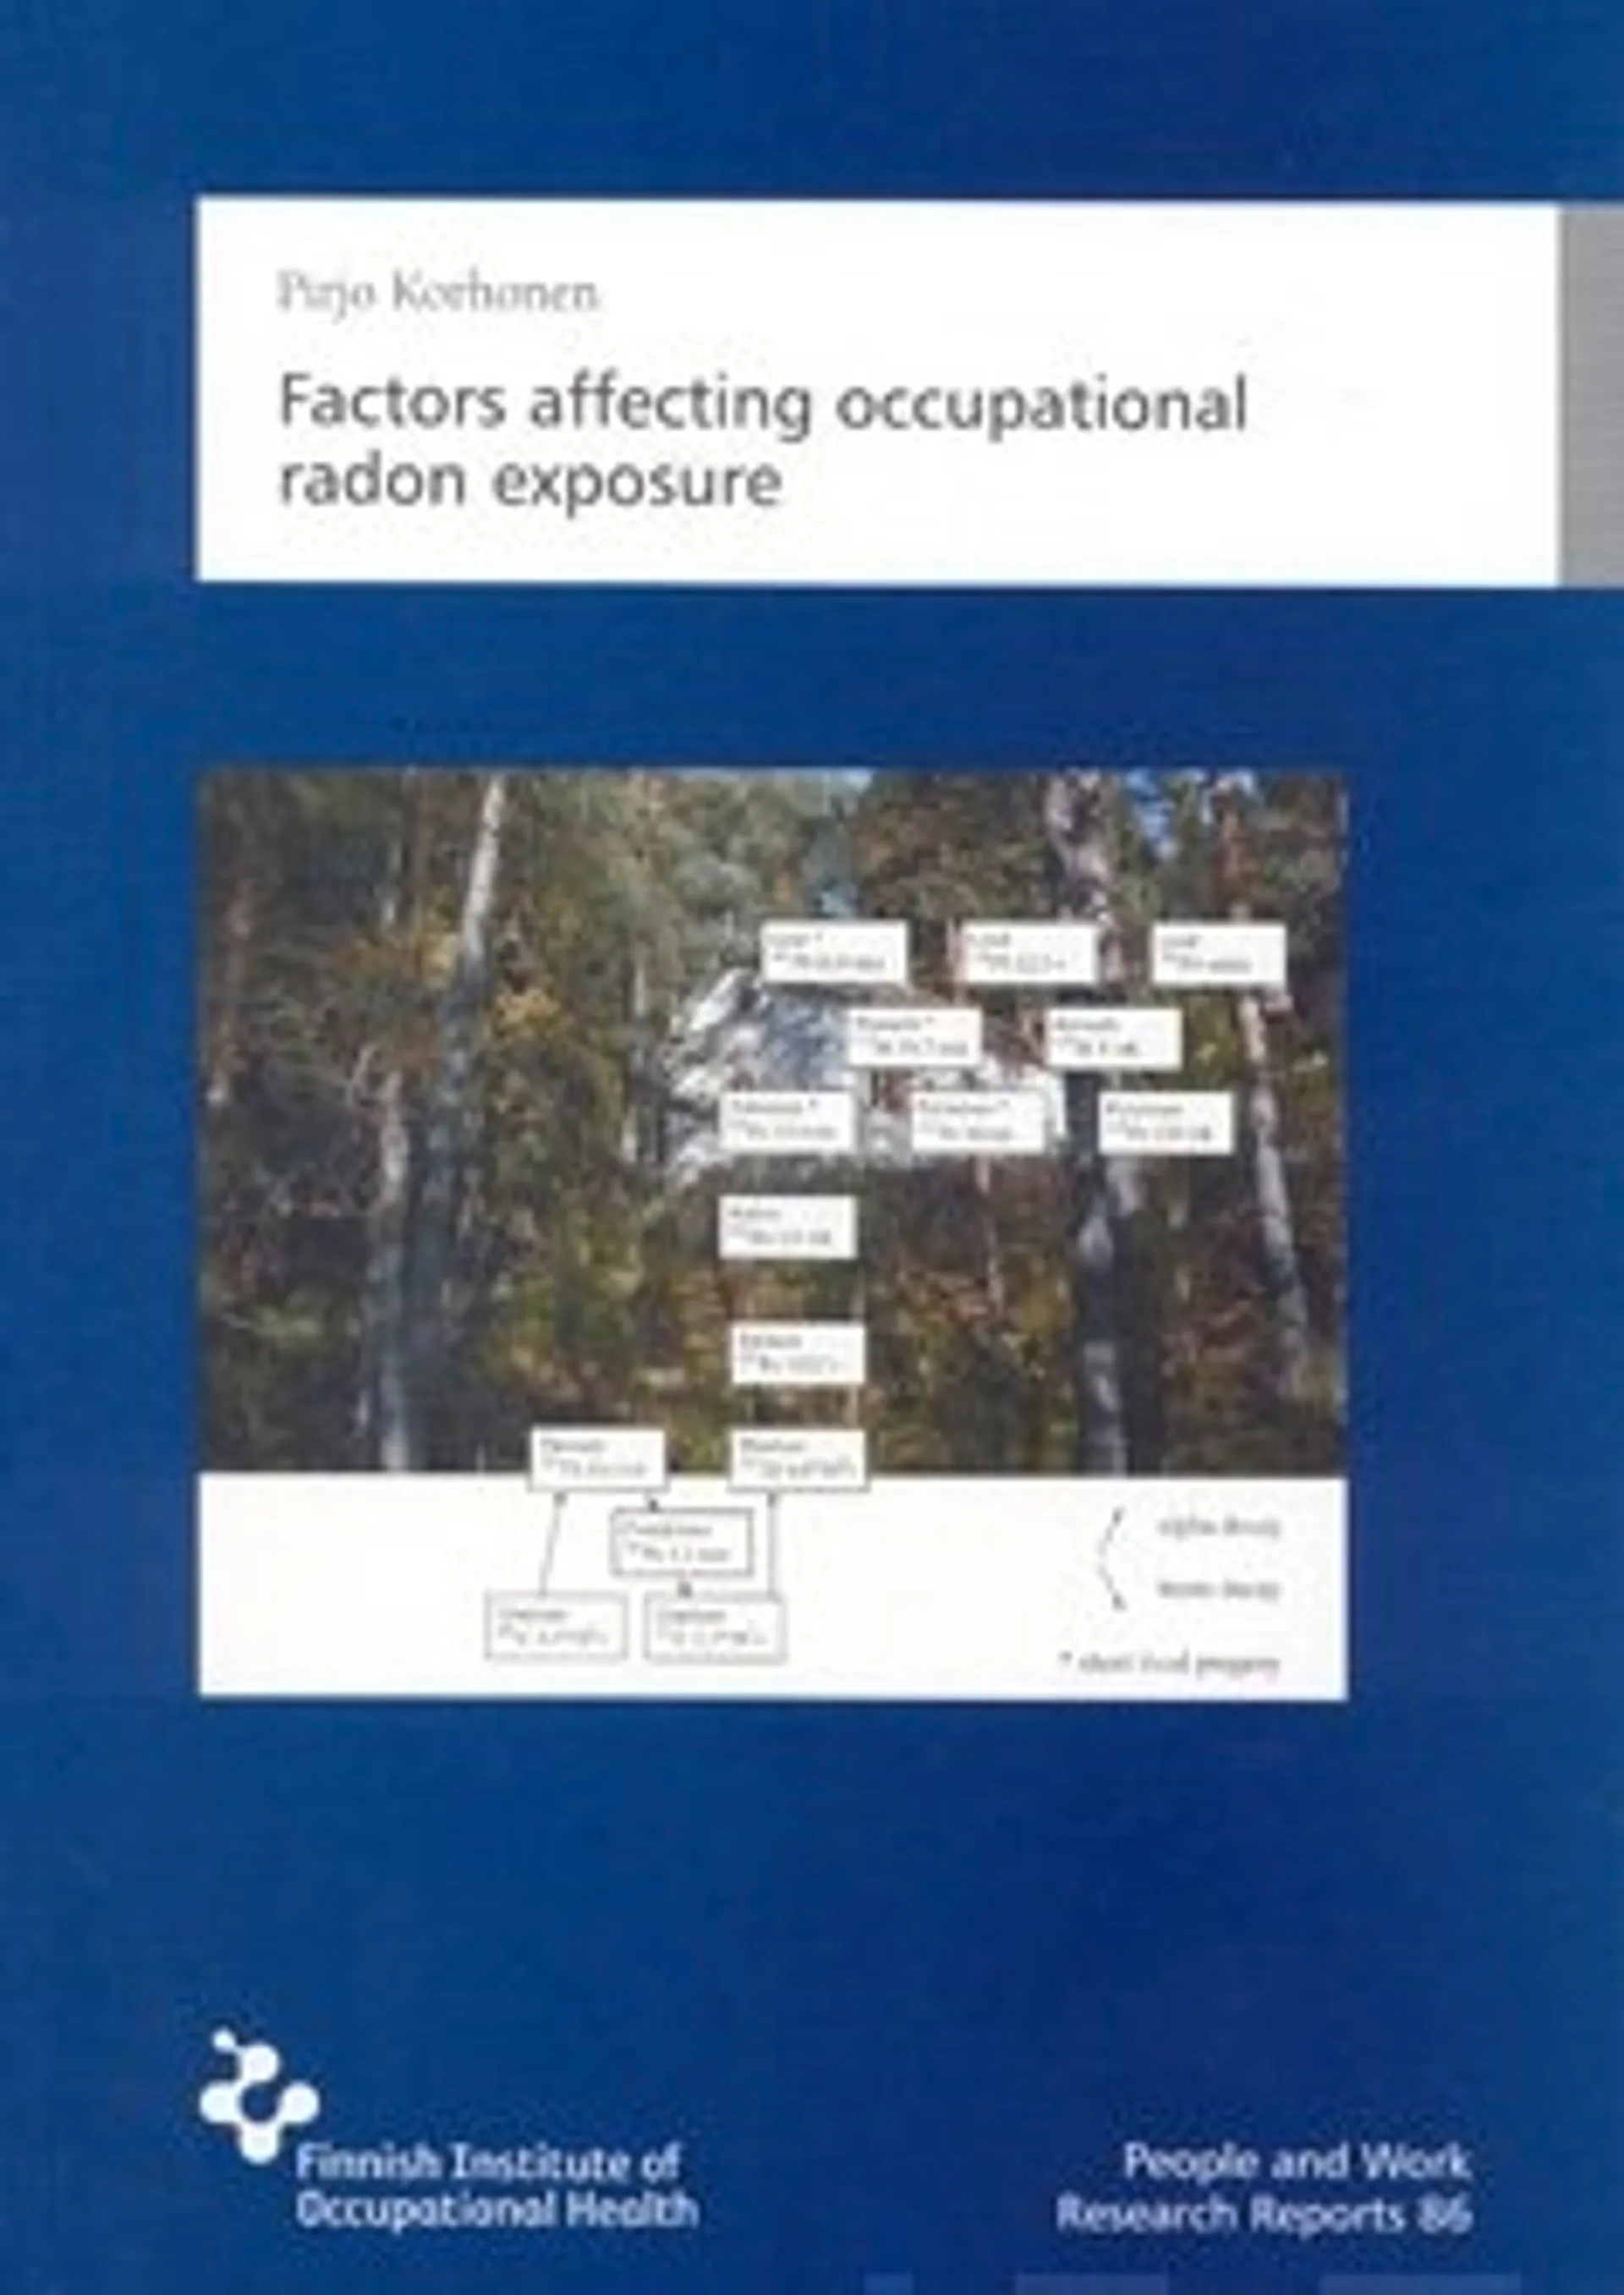 Factors affecting occupational radon exposure